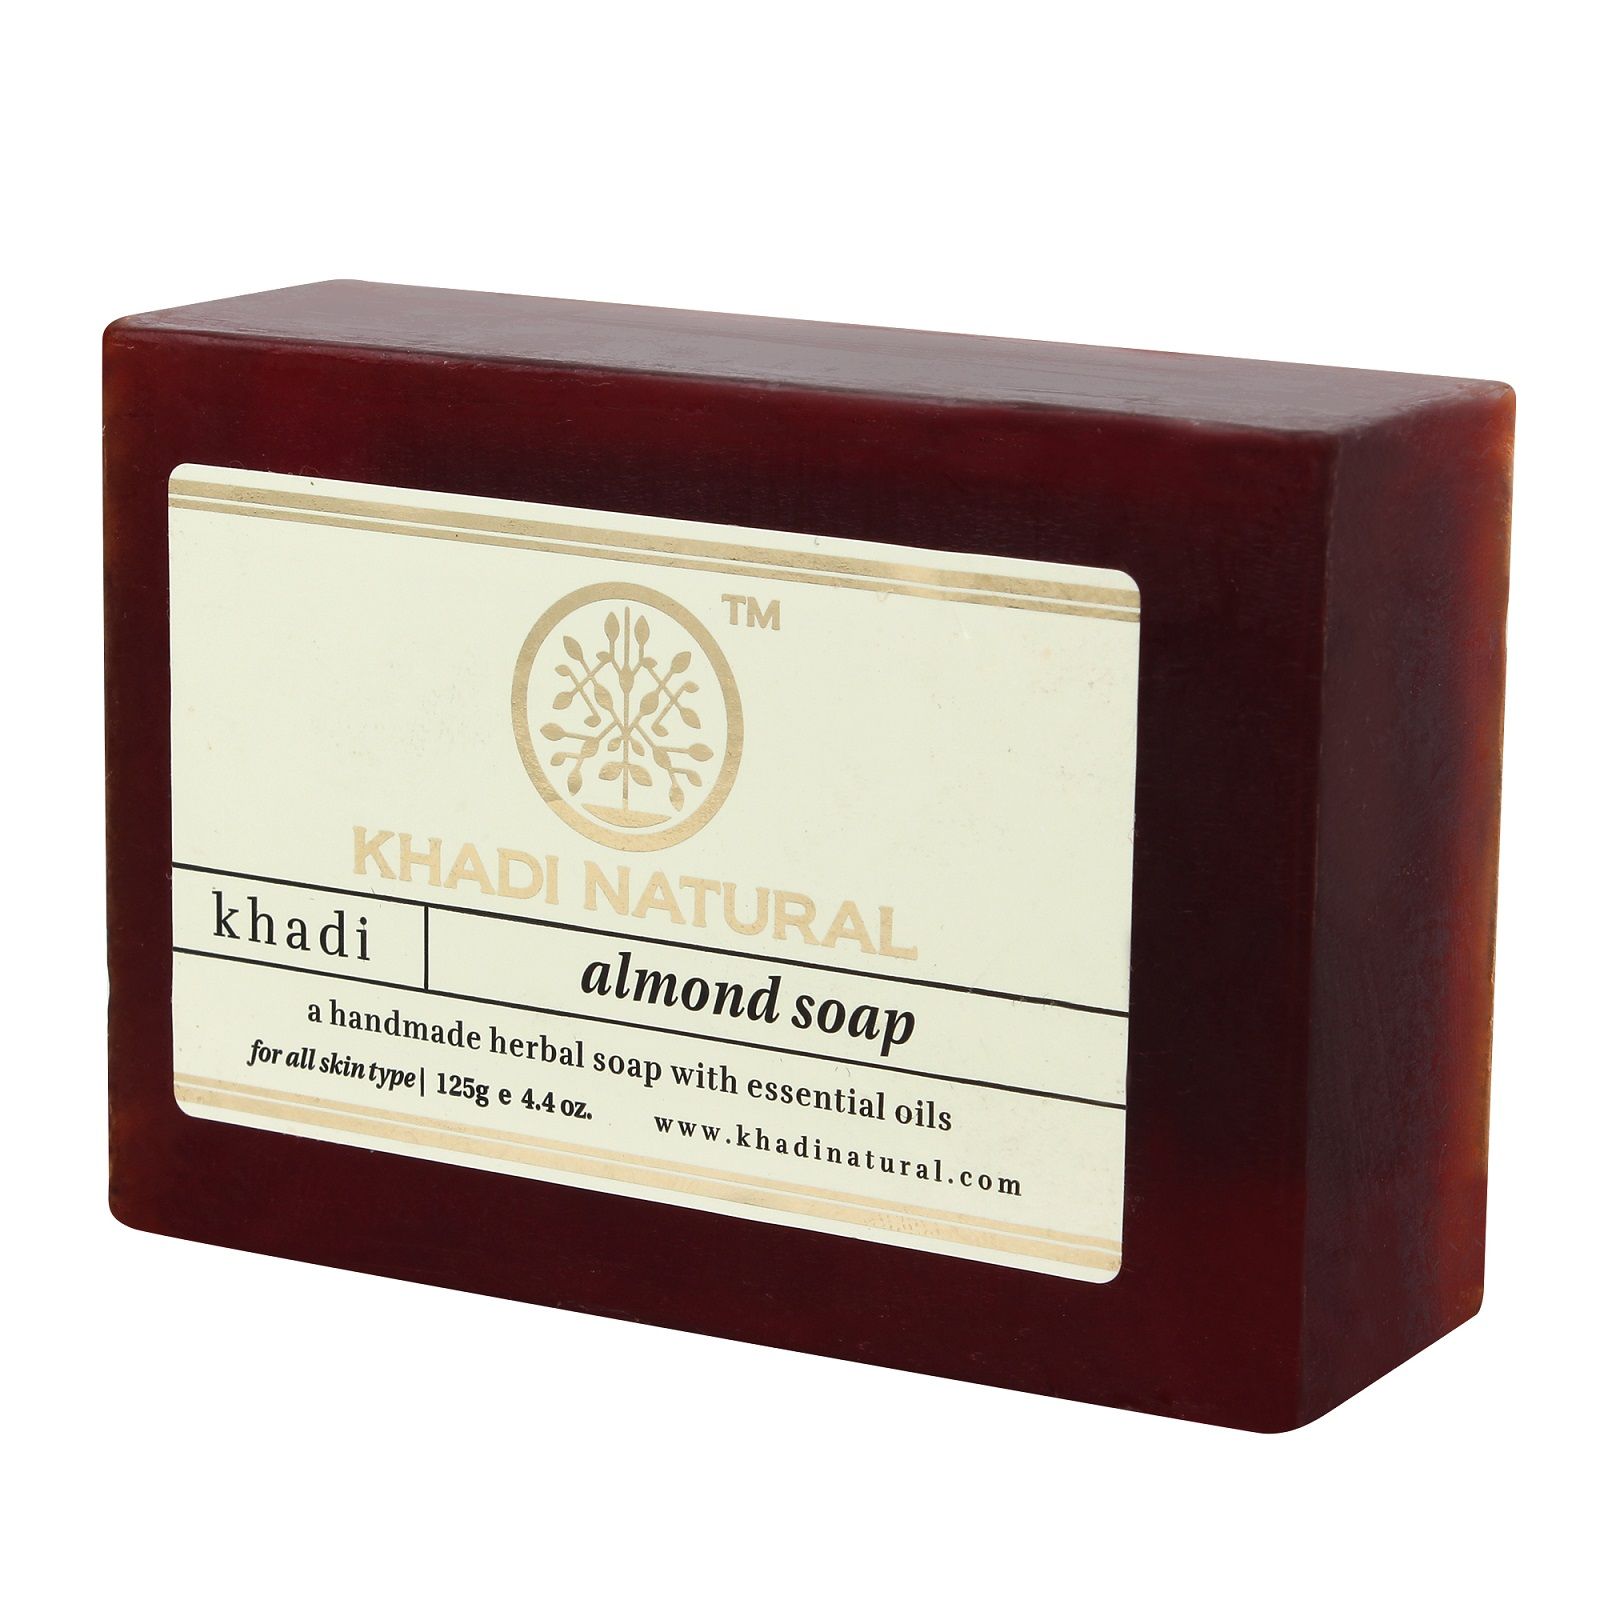 Khadi Natural Almond Soap